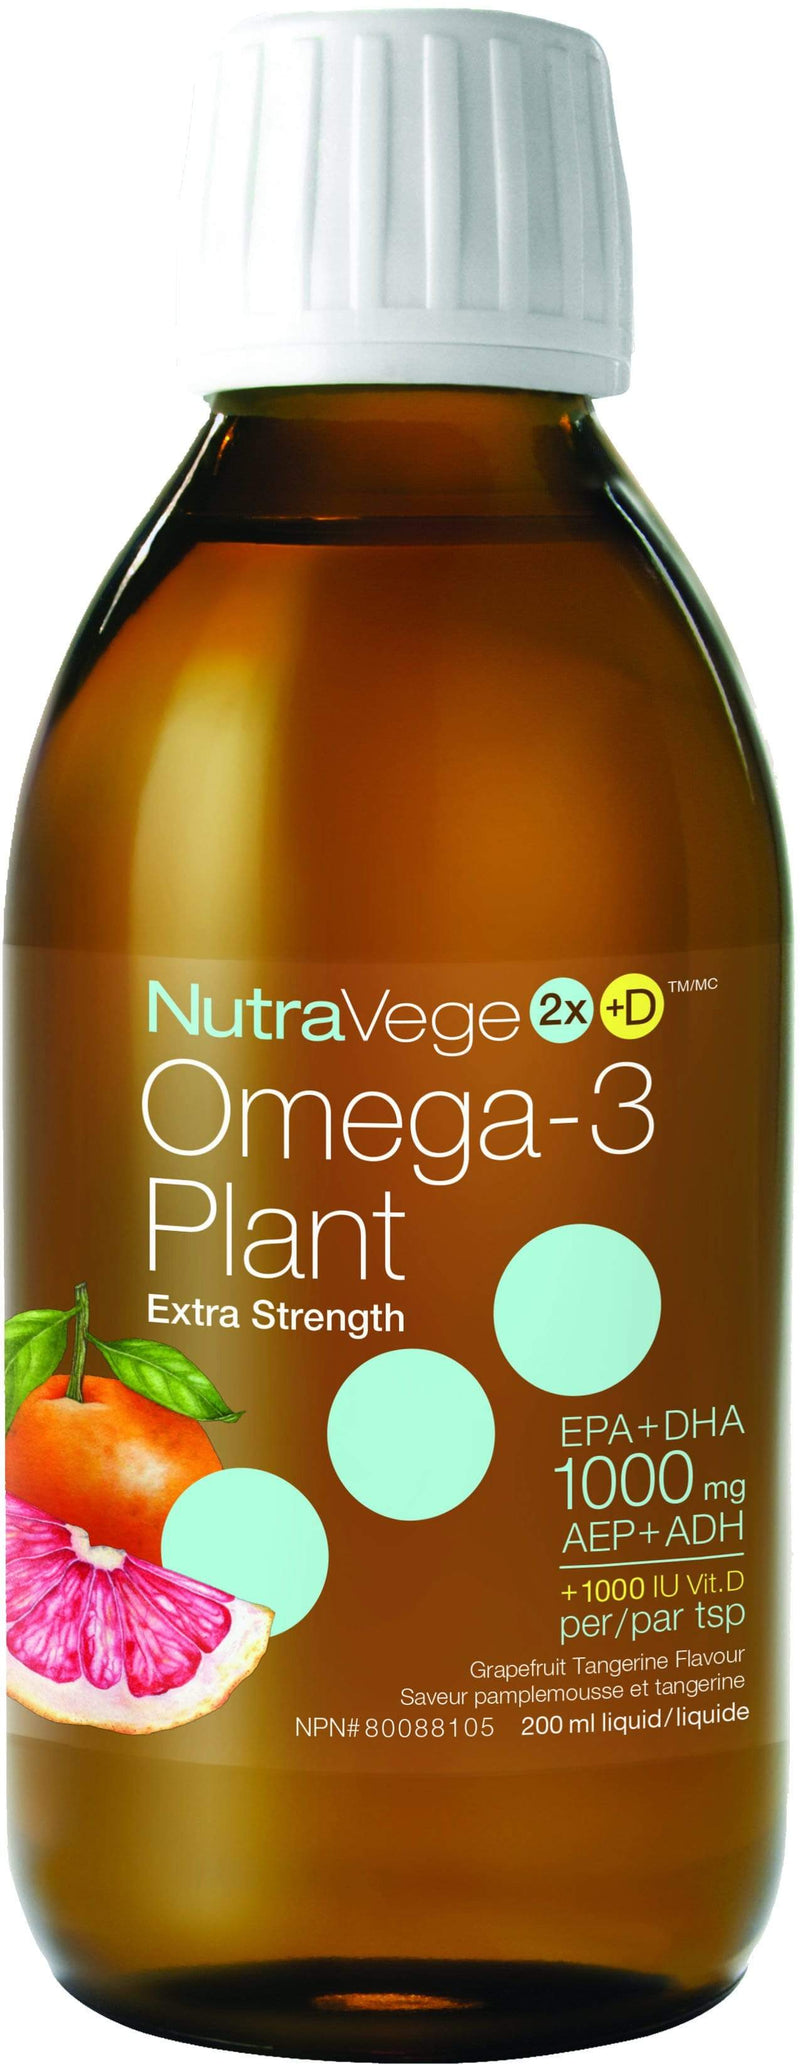 NutraVege2x+D 오메가-3 + 비타민 D 식물 엑스트라 스트렝스 - 자몽 귤(200 ml)